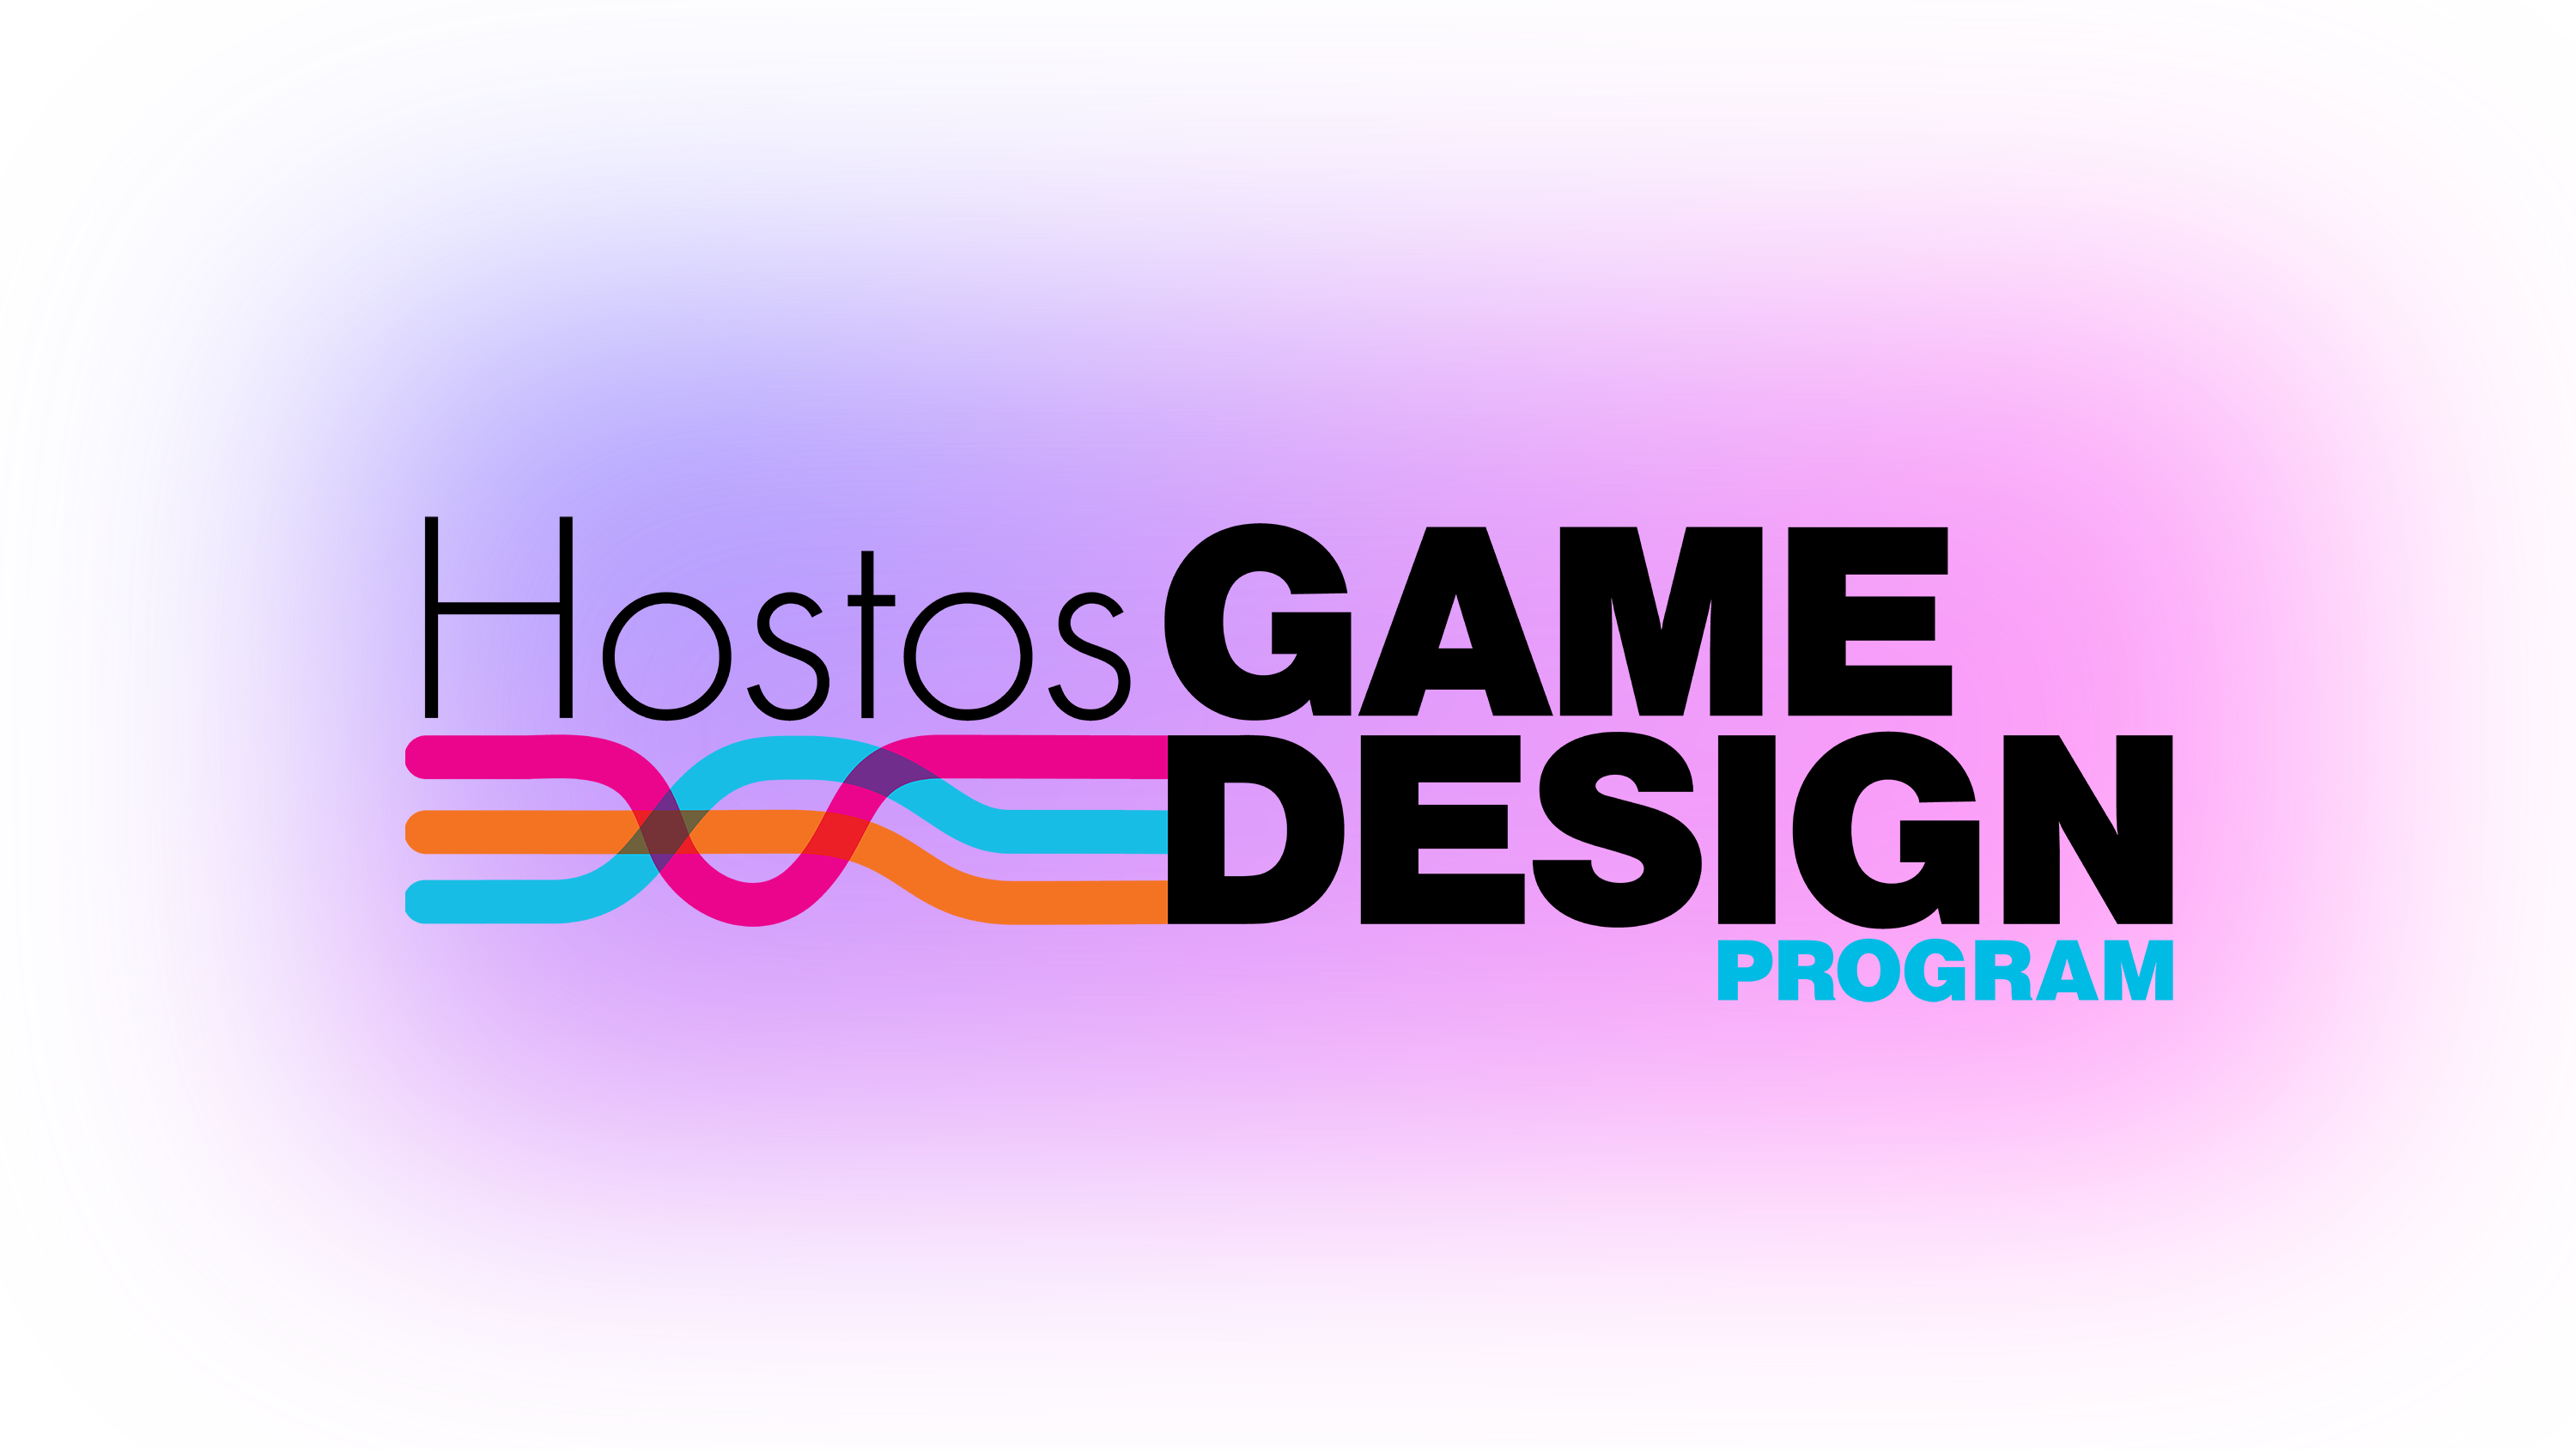 About Hostos Game Design